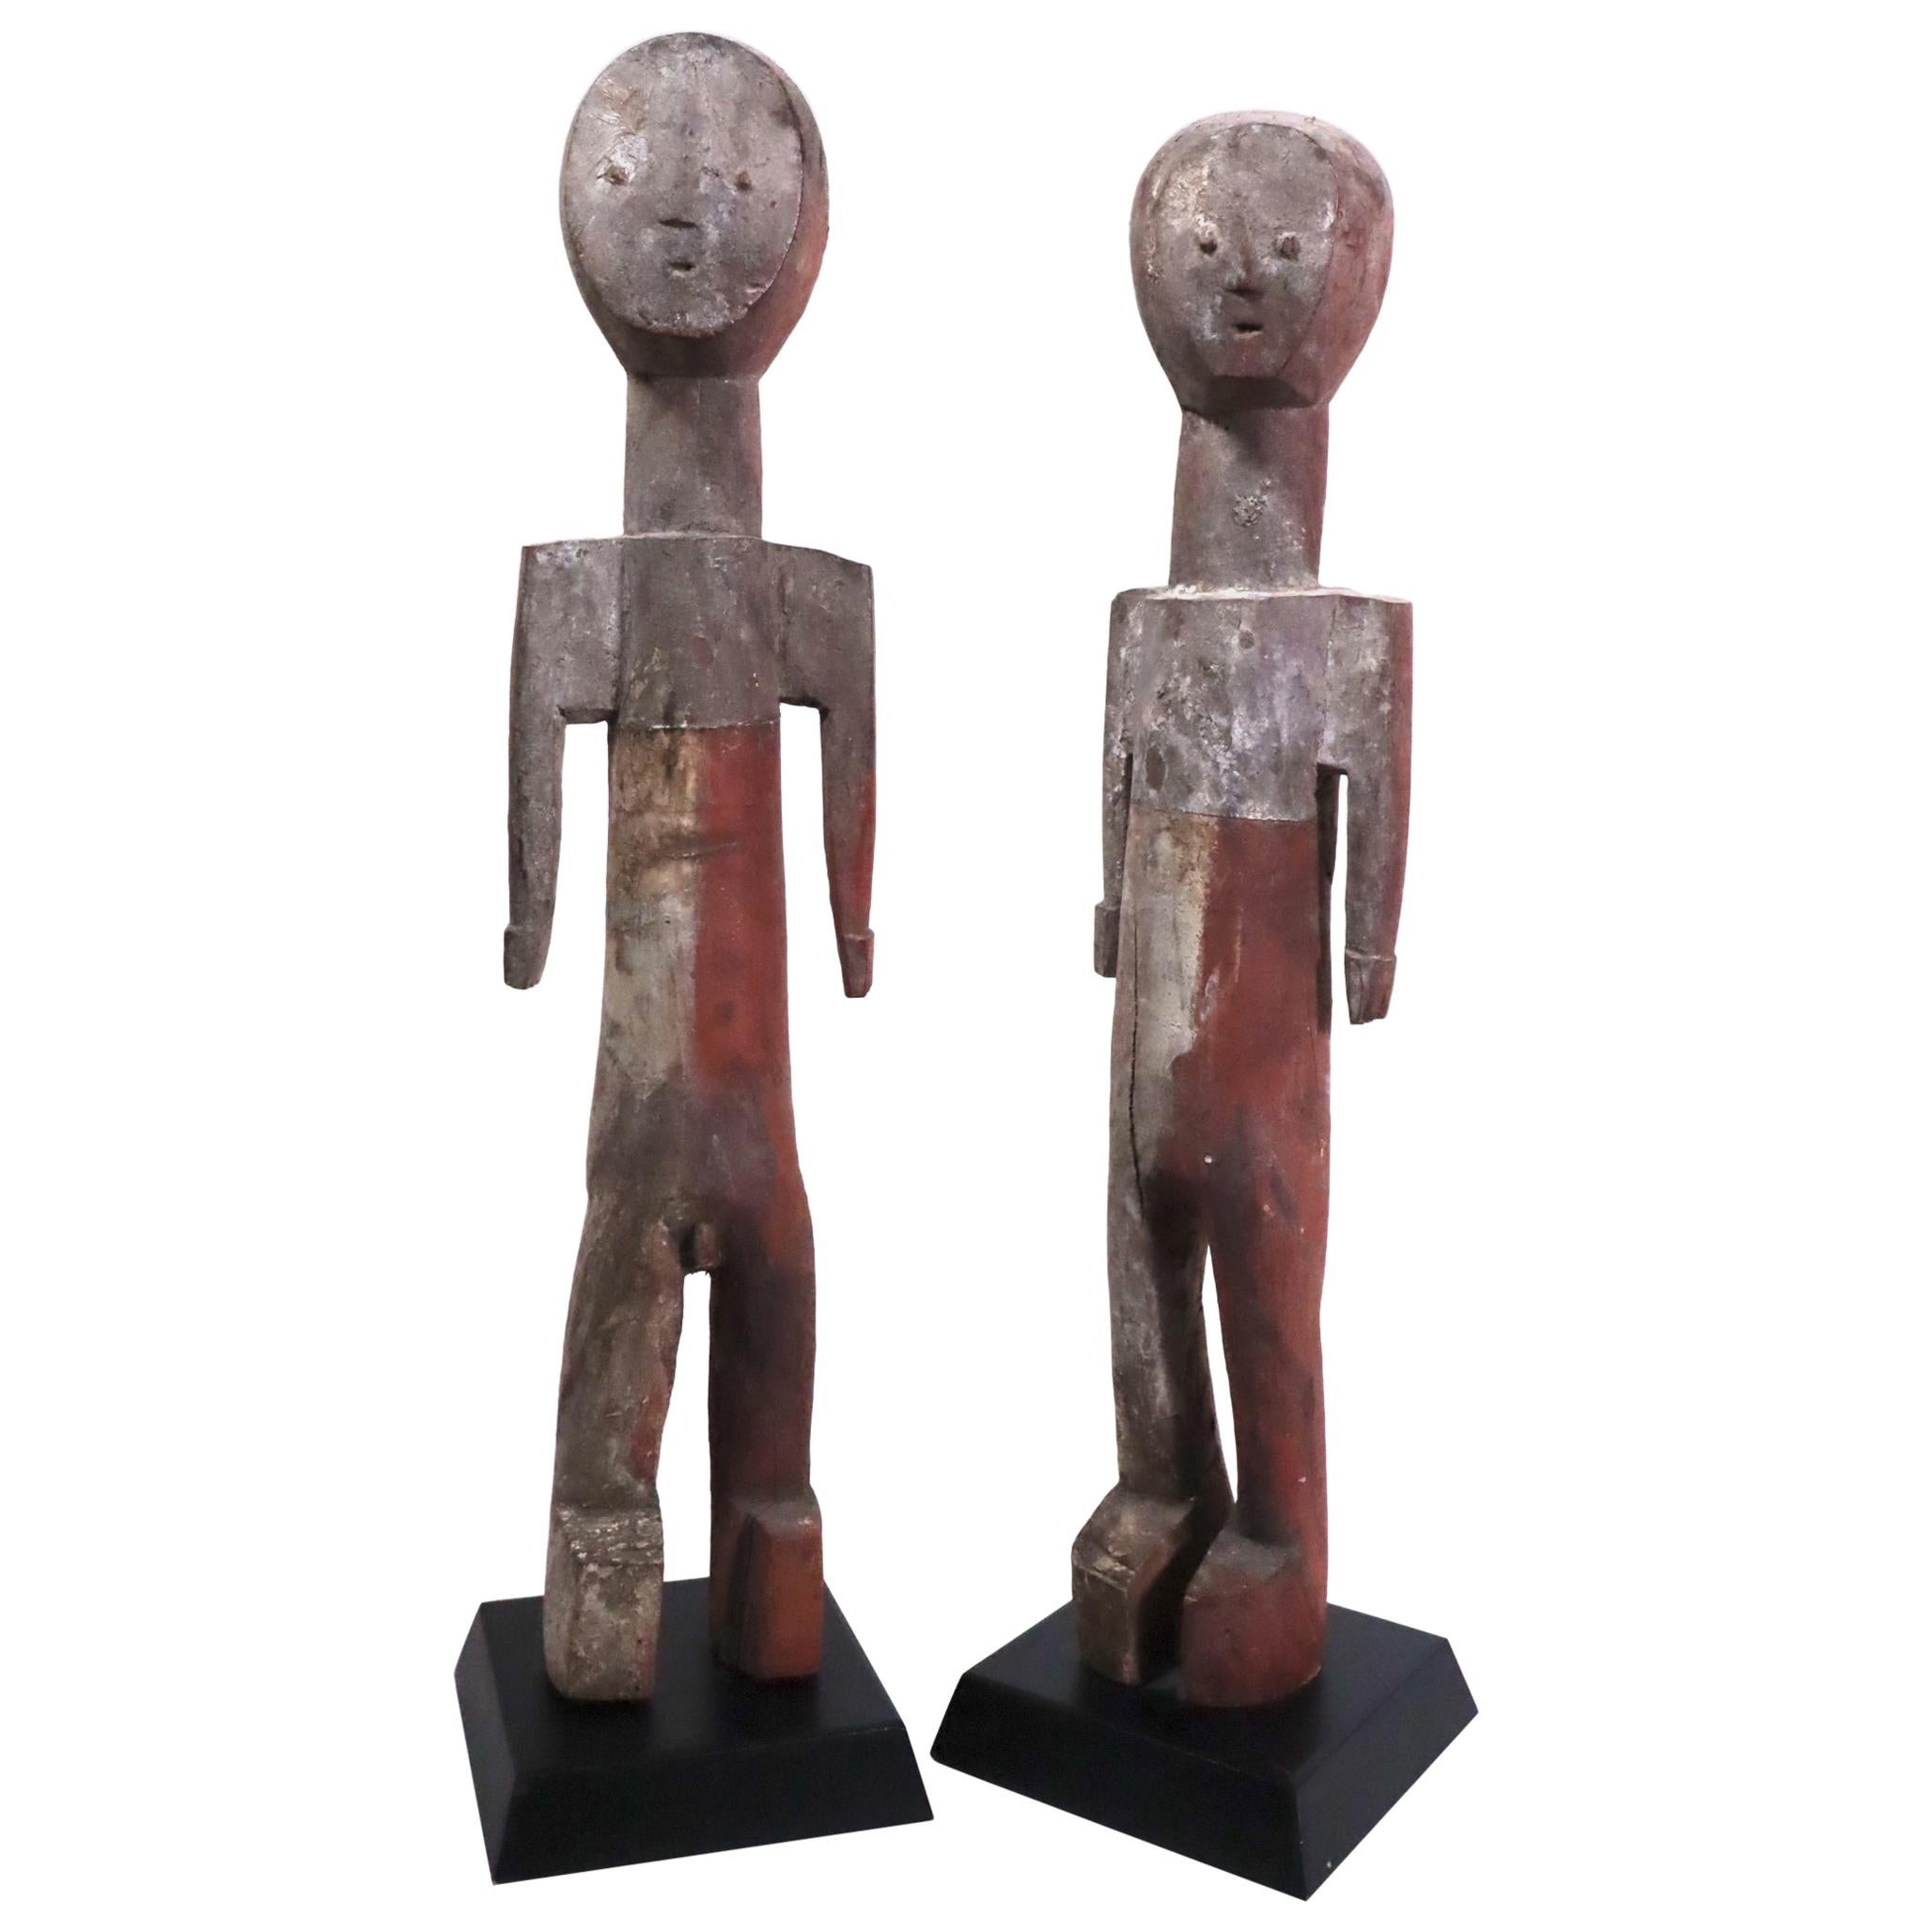 Pair of Adan Figures Togo Ghana Minimal Cubist Expressionist African Tribal Art